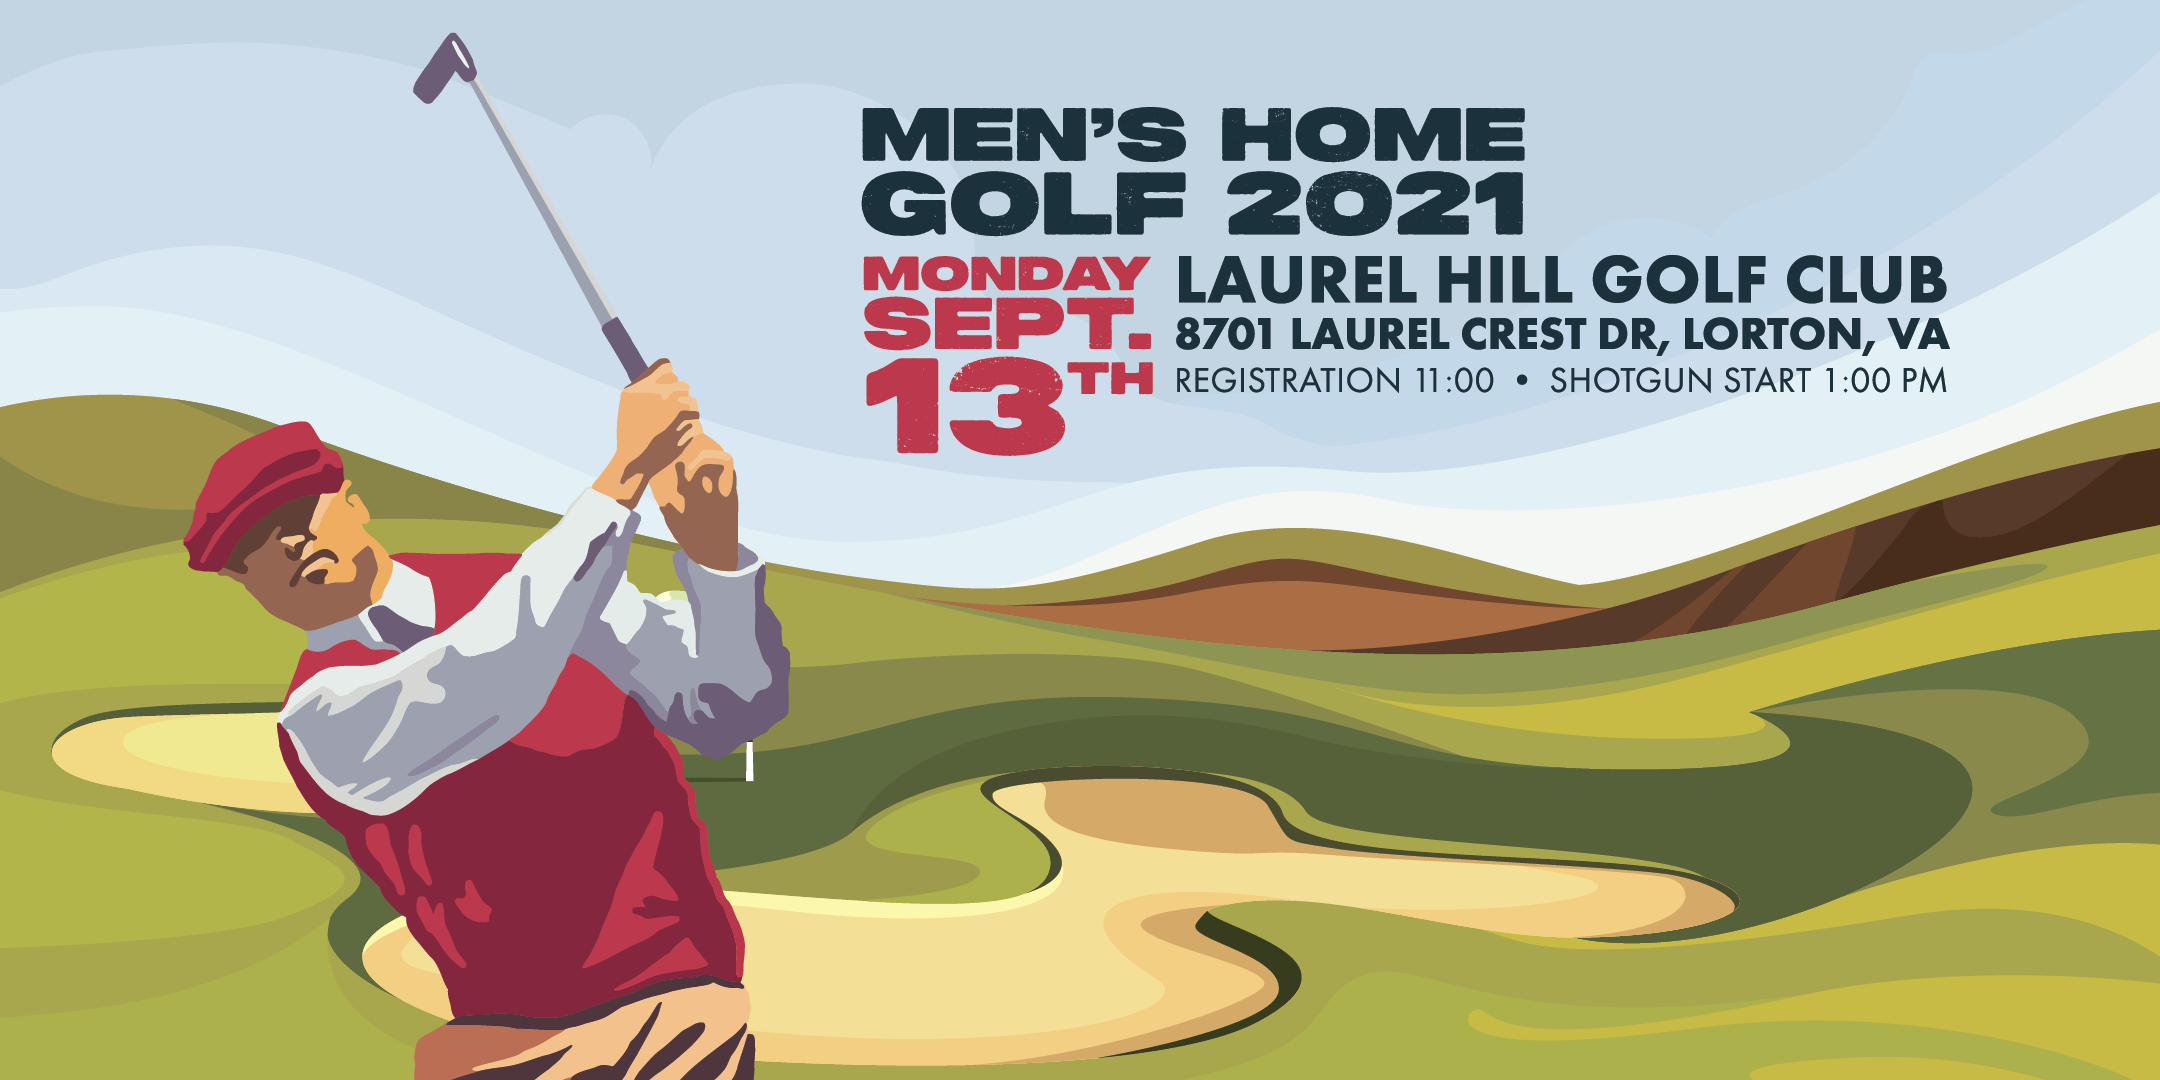 The Men's Home Golf Tournament 2021